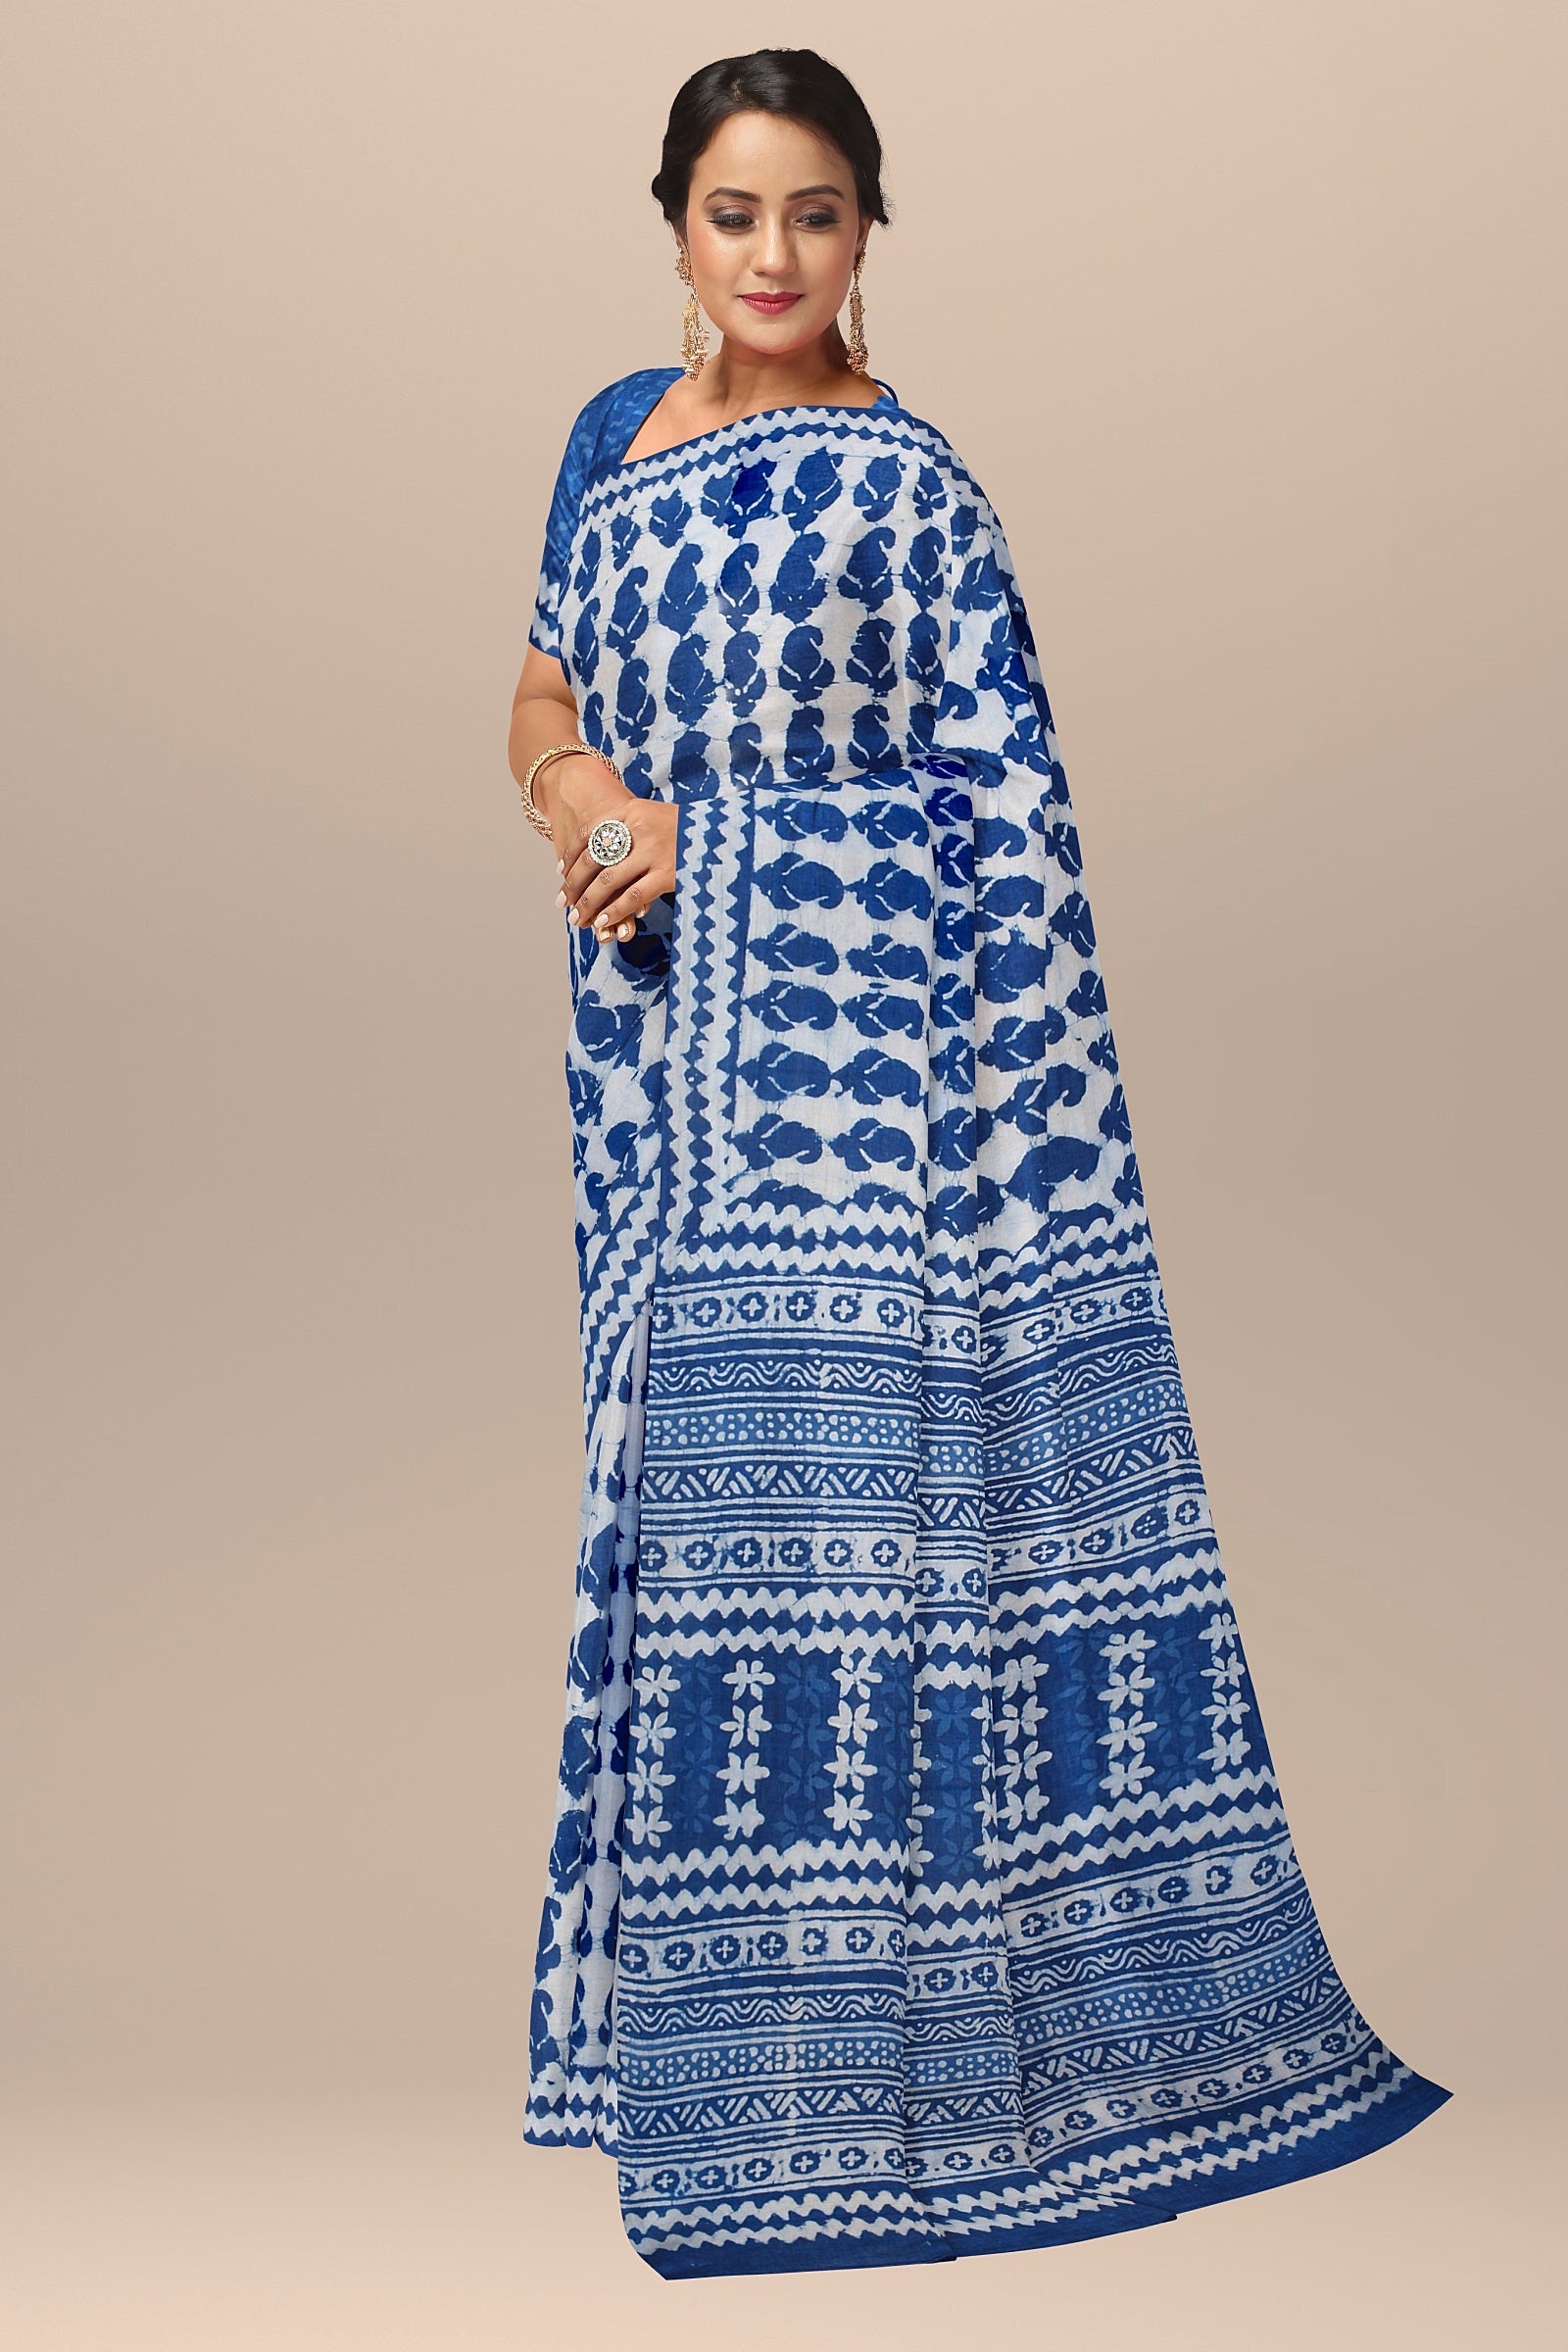 Chhipa Hand Block Printed Daboo Indigo Color Cotton Saree With Carry Print SKU-4255 - Bhartiya Shilp